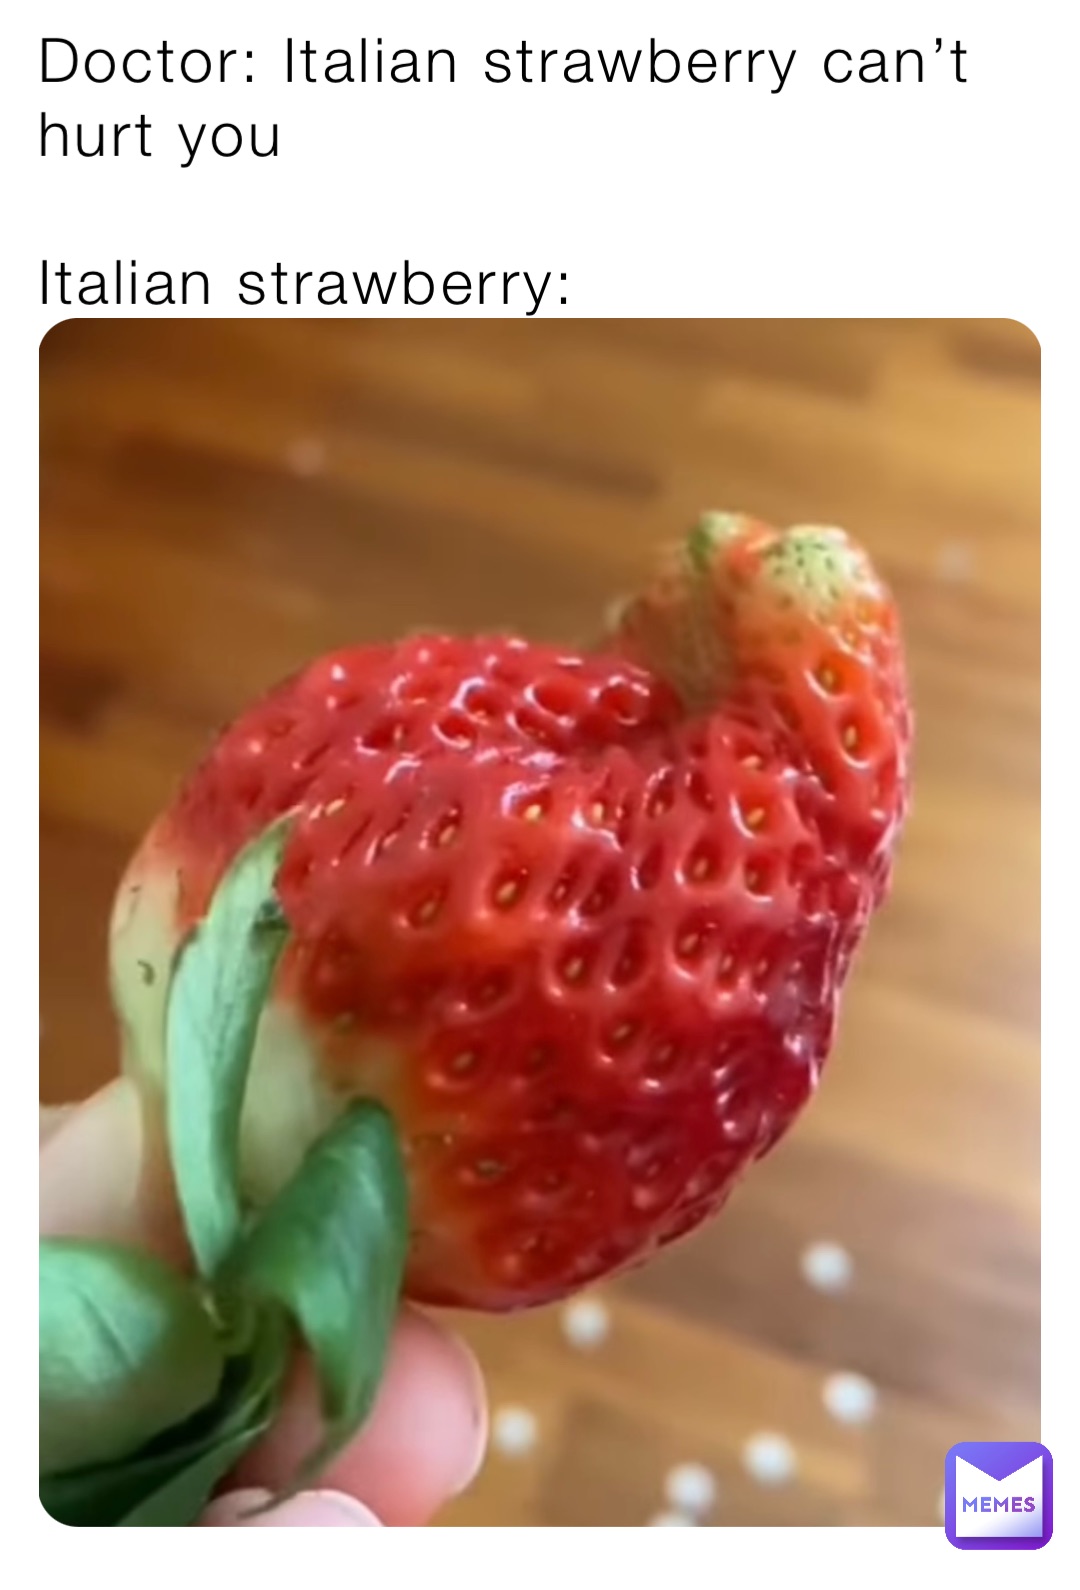 Doctor: Italian strawberry can’t hurt you

Italian strawberry: